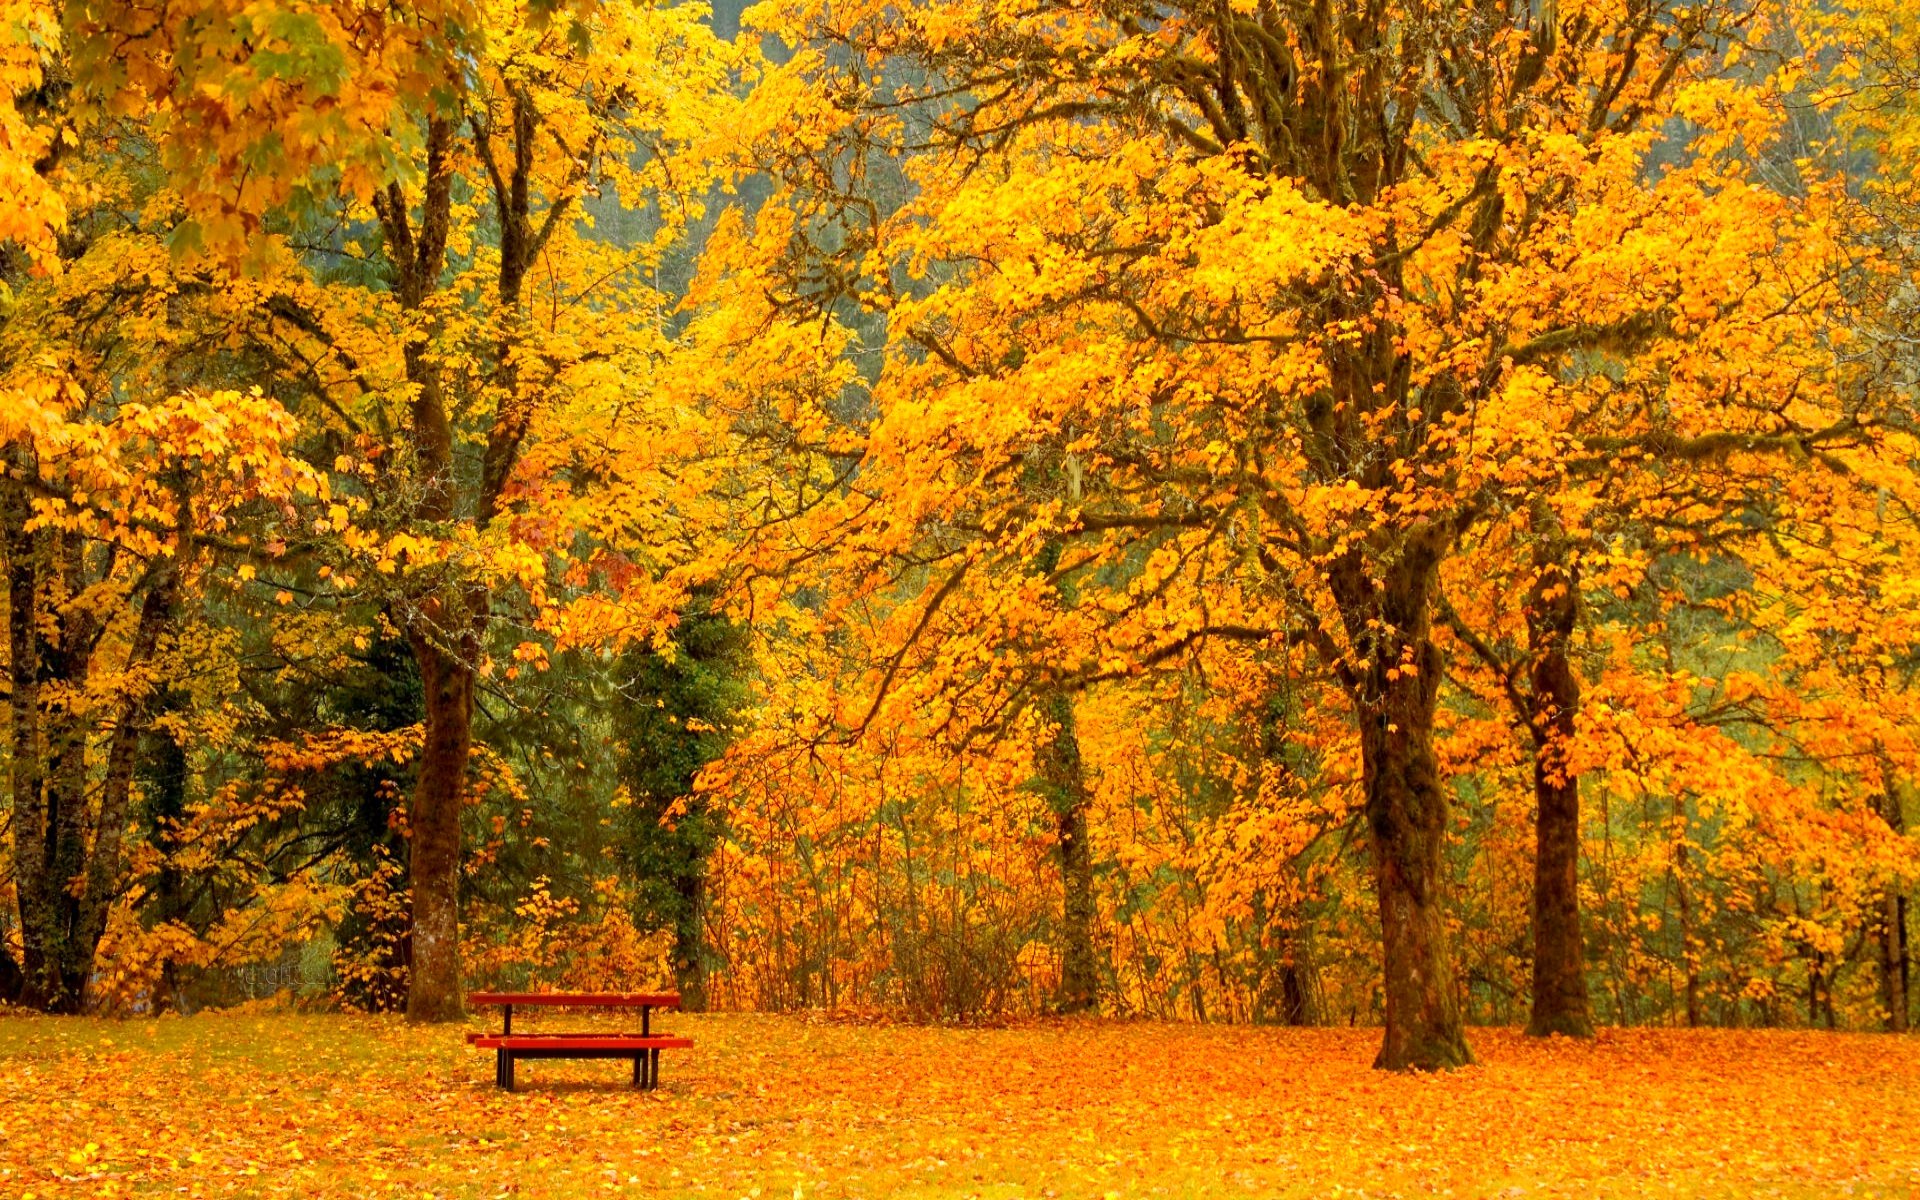 Autumn Fall Season Nature Landscape Leaf Leaves Color Seasons